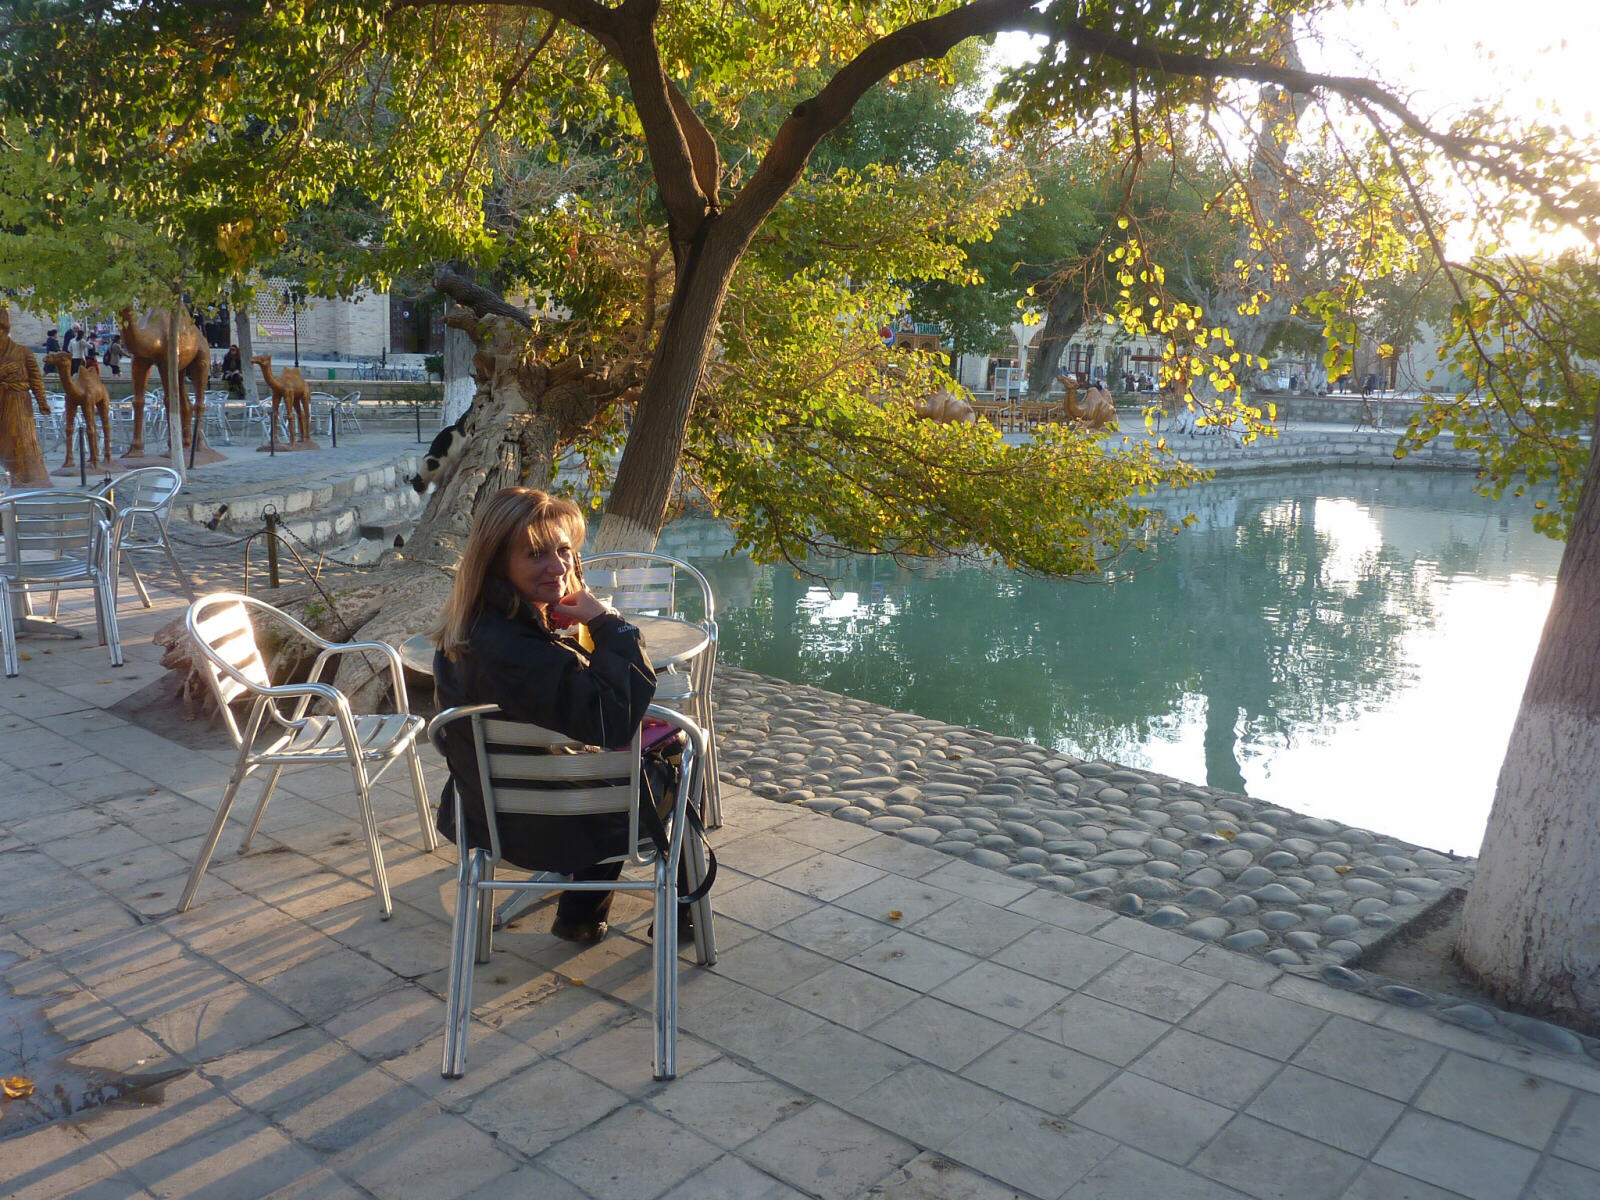 Lyabi Hauz (the plaza round the pool) in Bukhara, Uzbekistan